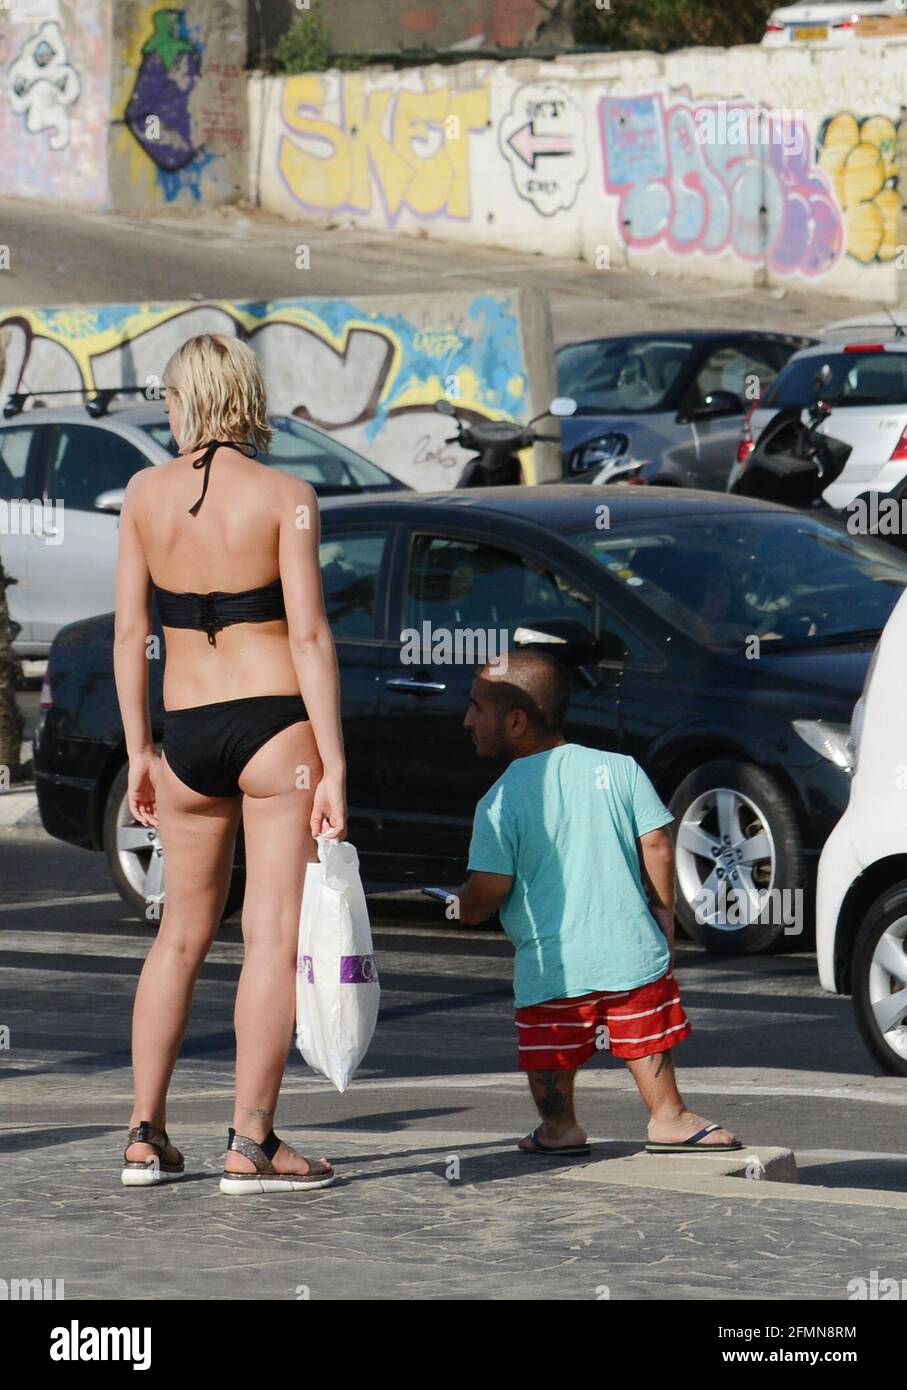 https://c8.alamy.com/comp/2FMN8RM/a-dwarf-man-standing-next-to-a-blonde-woman-in-bikini-at-the-waterfront-promenade-in-tel-aviv-israel-2FMN8RM.jpg